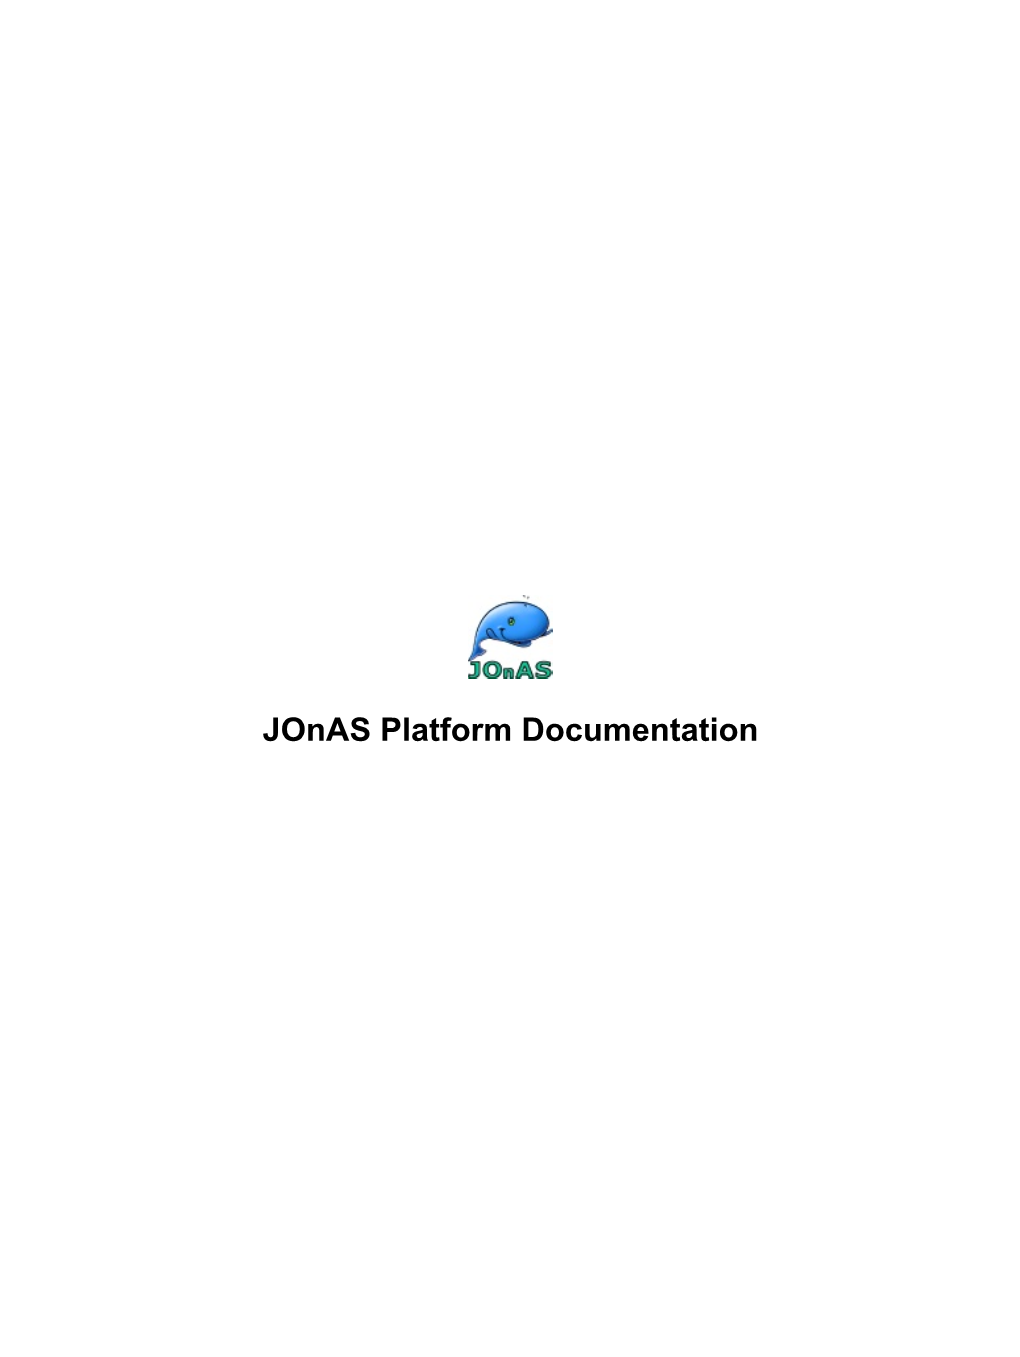 Jonas Platform Documentation Jonas Platform Documentation